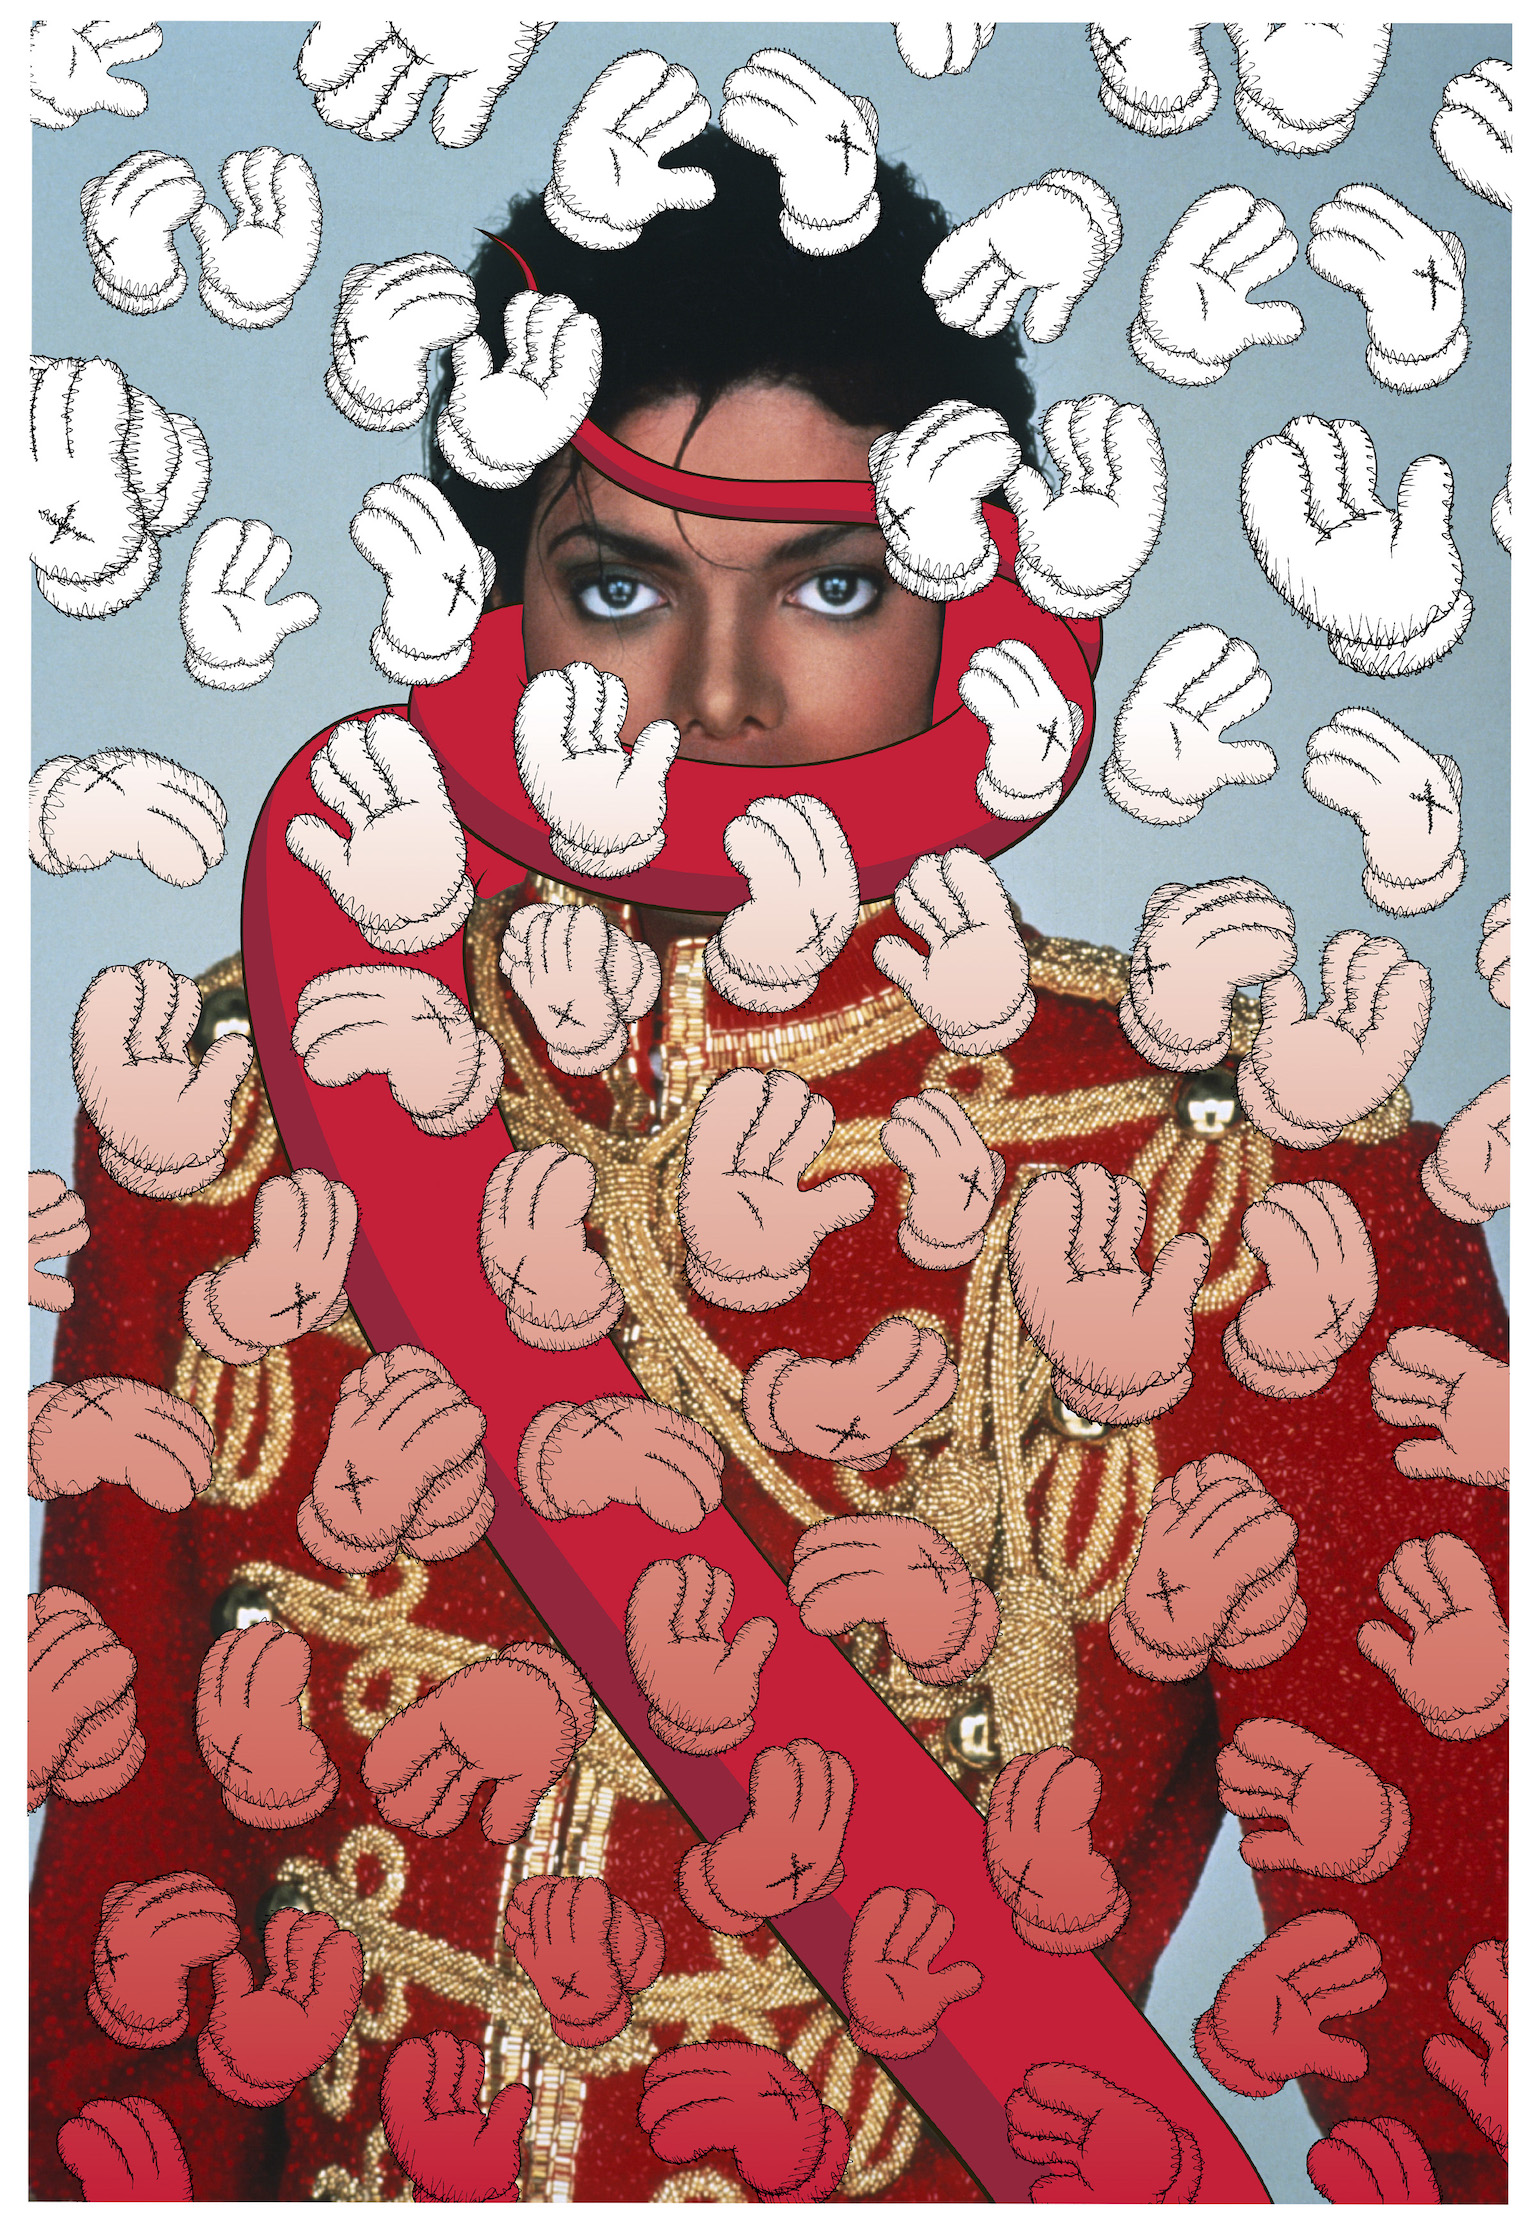 Michael Jackson portrait for Interview Magazine by KAWS